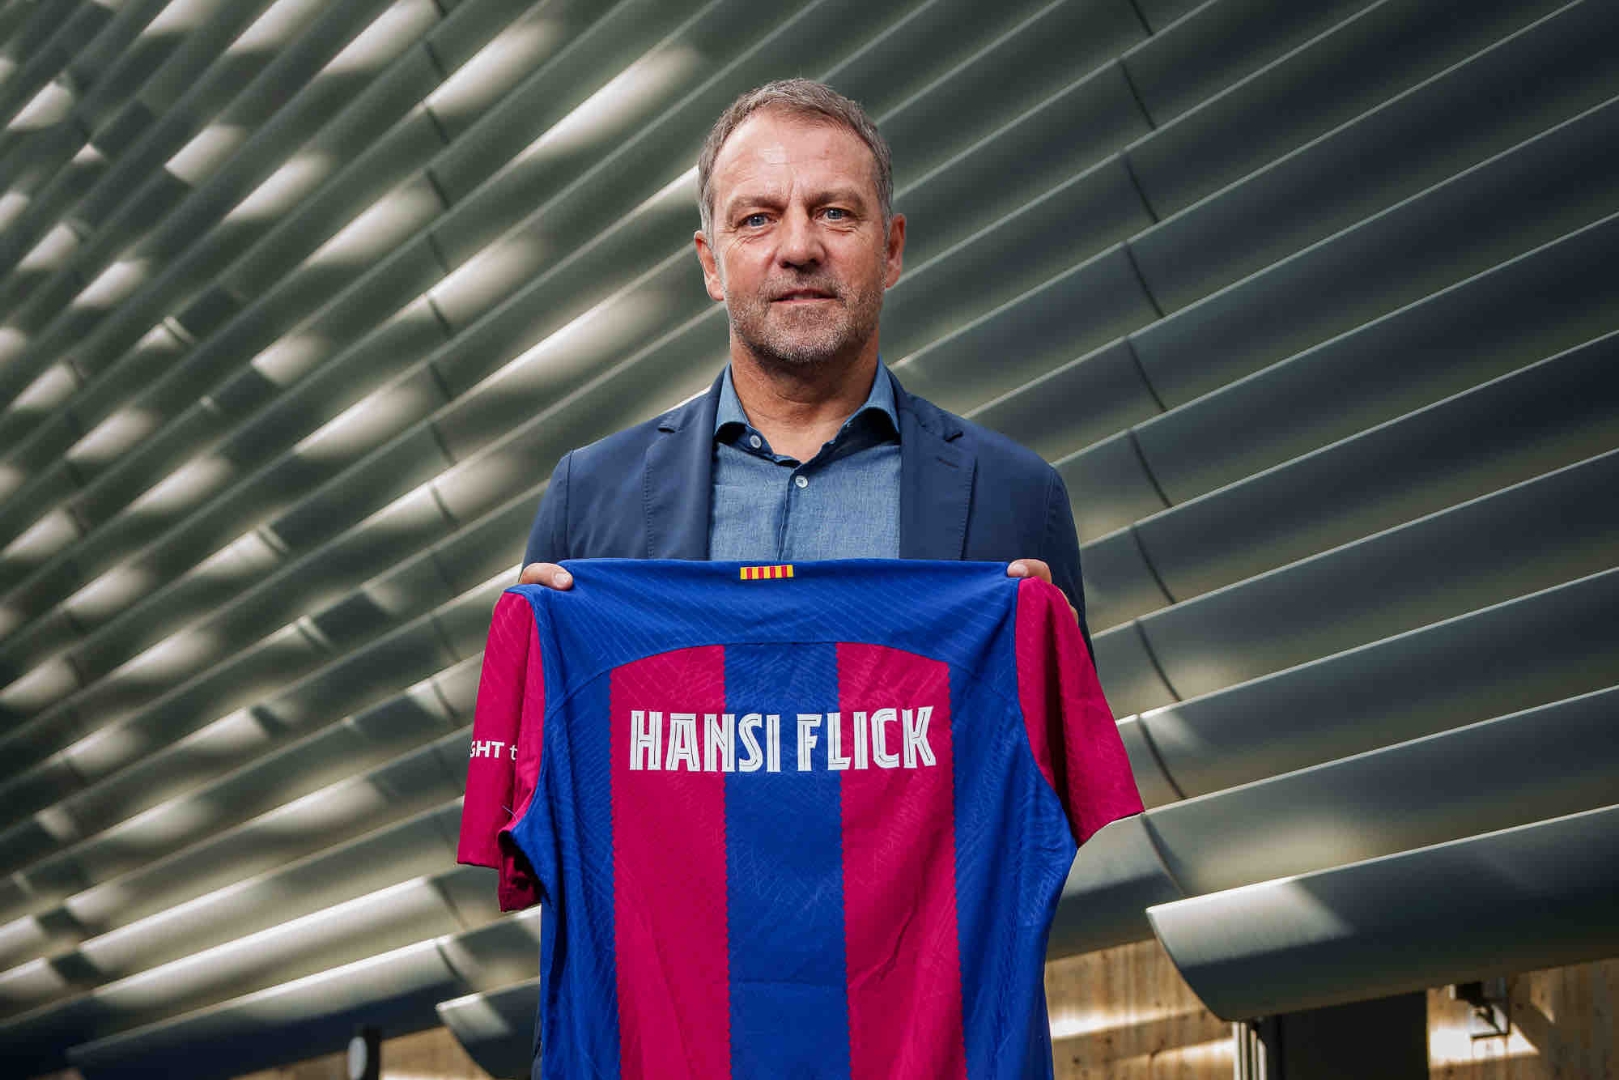 New Barcelona head coach Hansi Flick